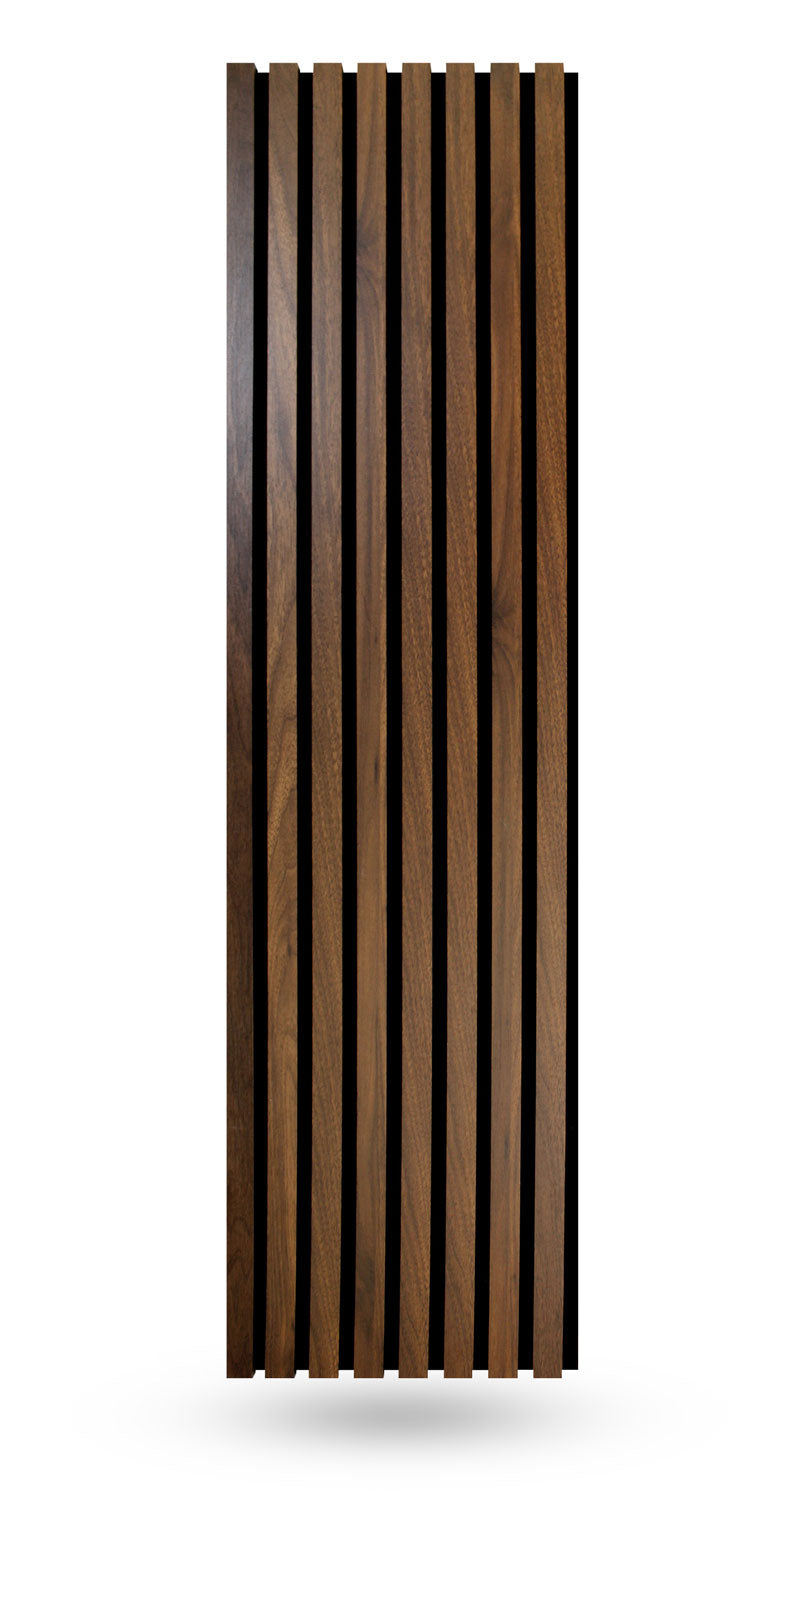 Antique Oak Acoustic Slat Wood Paneling for Soundproofing Walls 